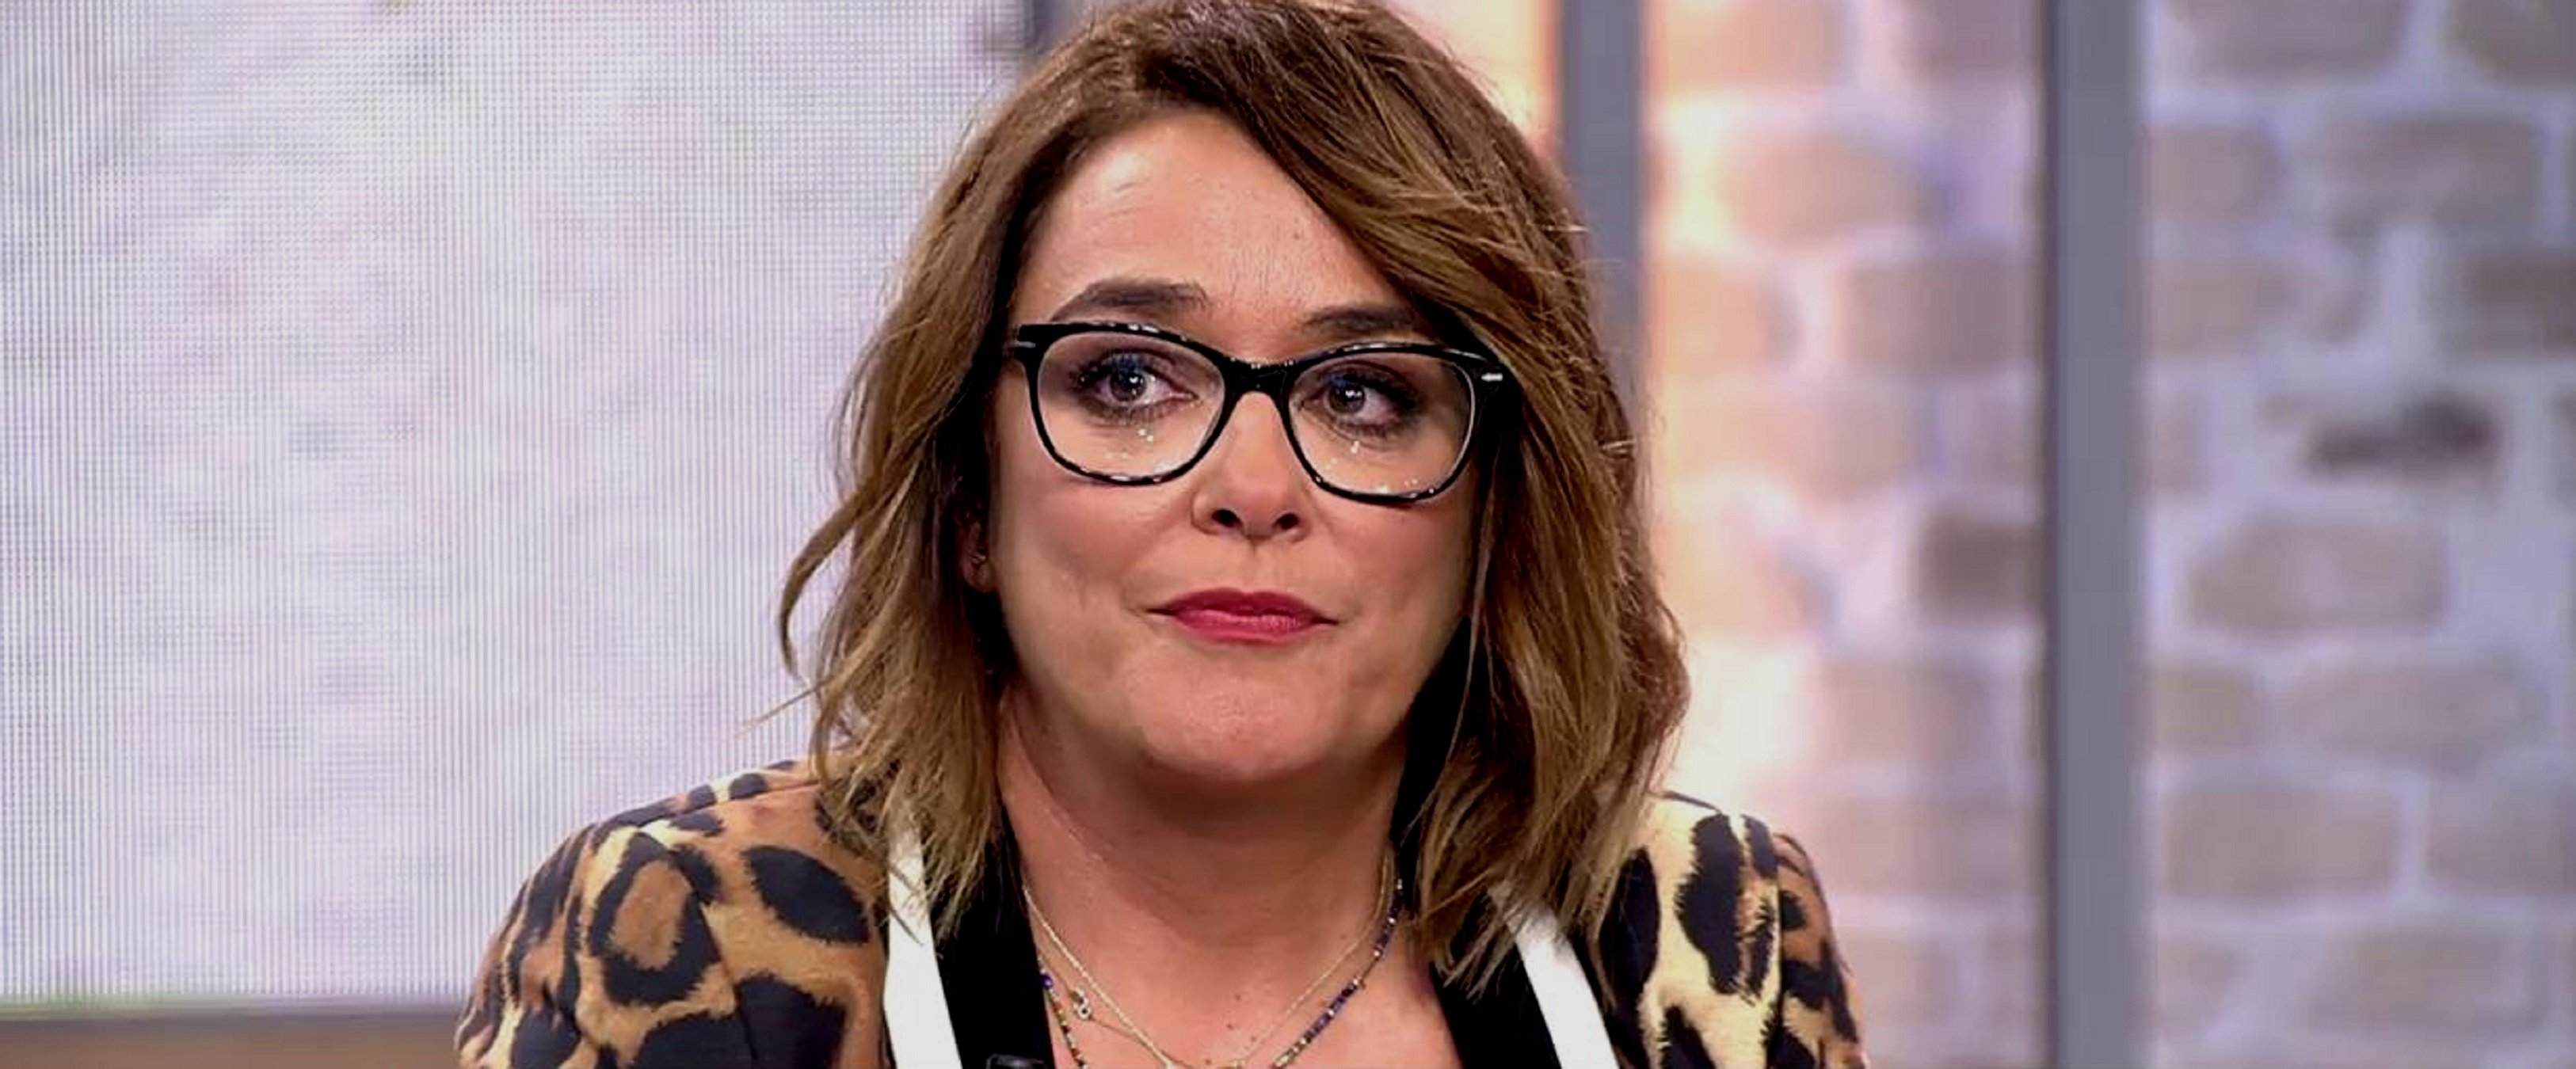 Toñi Moreno, “enfonsada” després de la punyalada de Telecinco